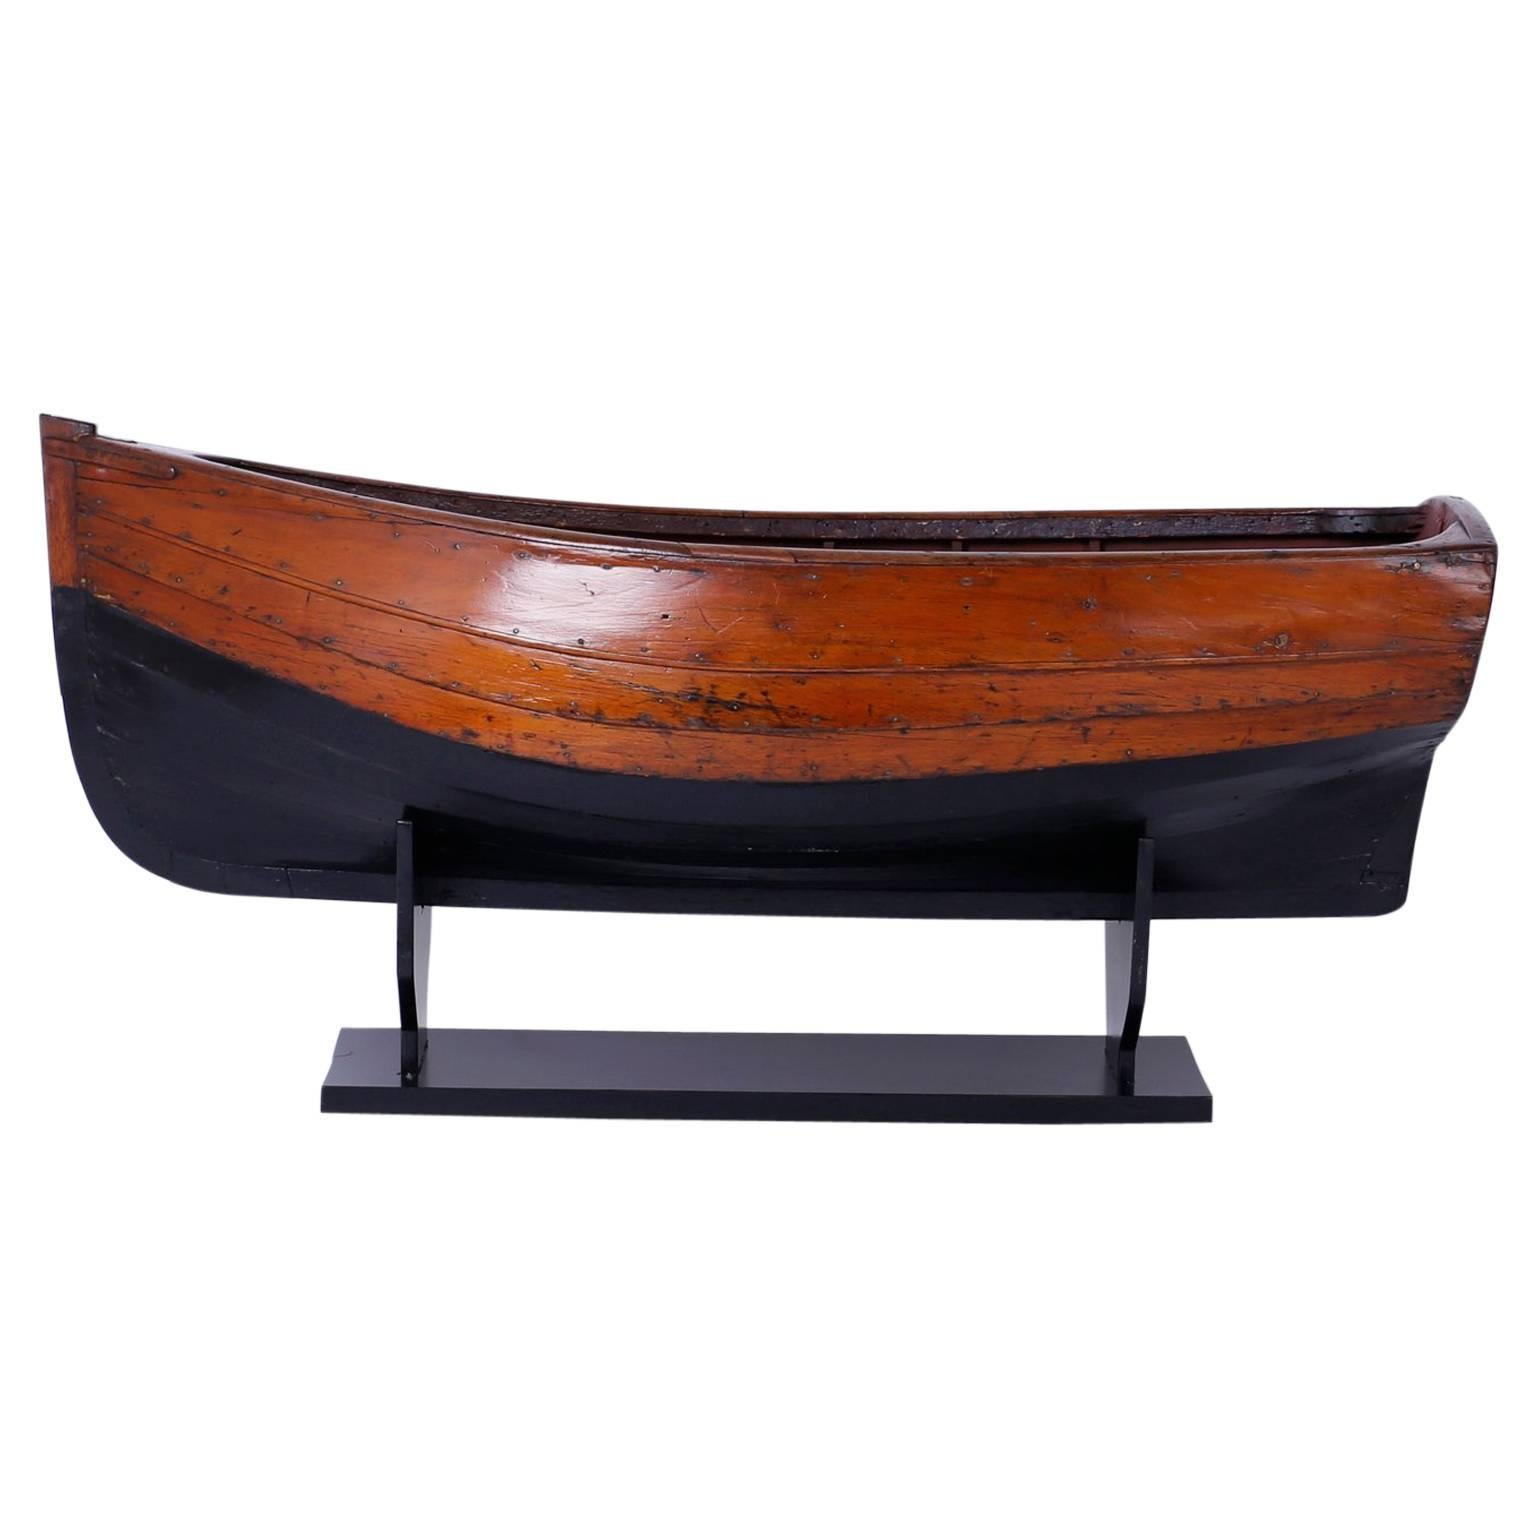 Large Mahogany Antique Boat Model For Sale